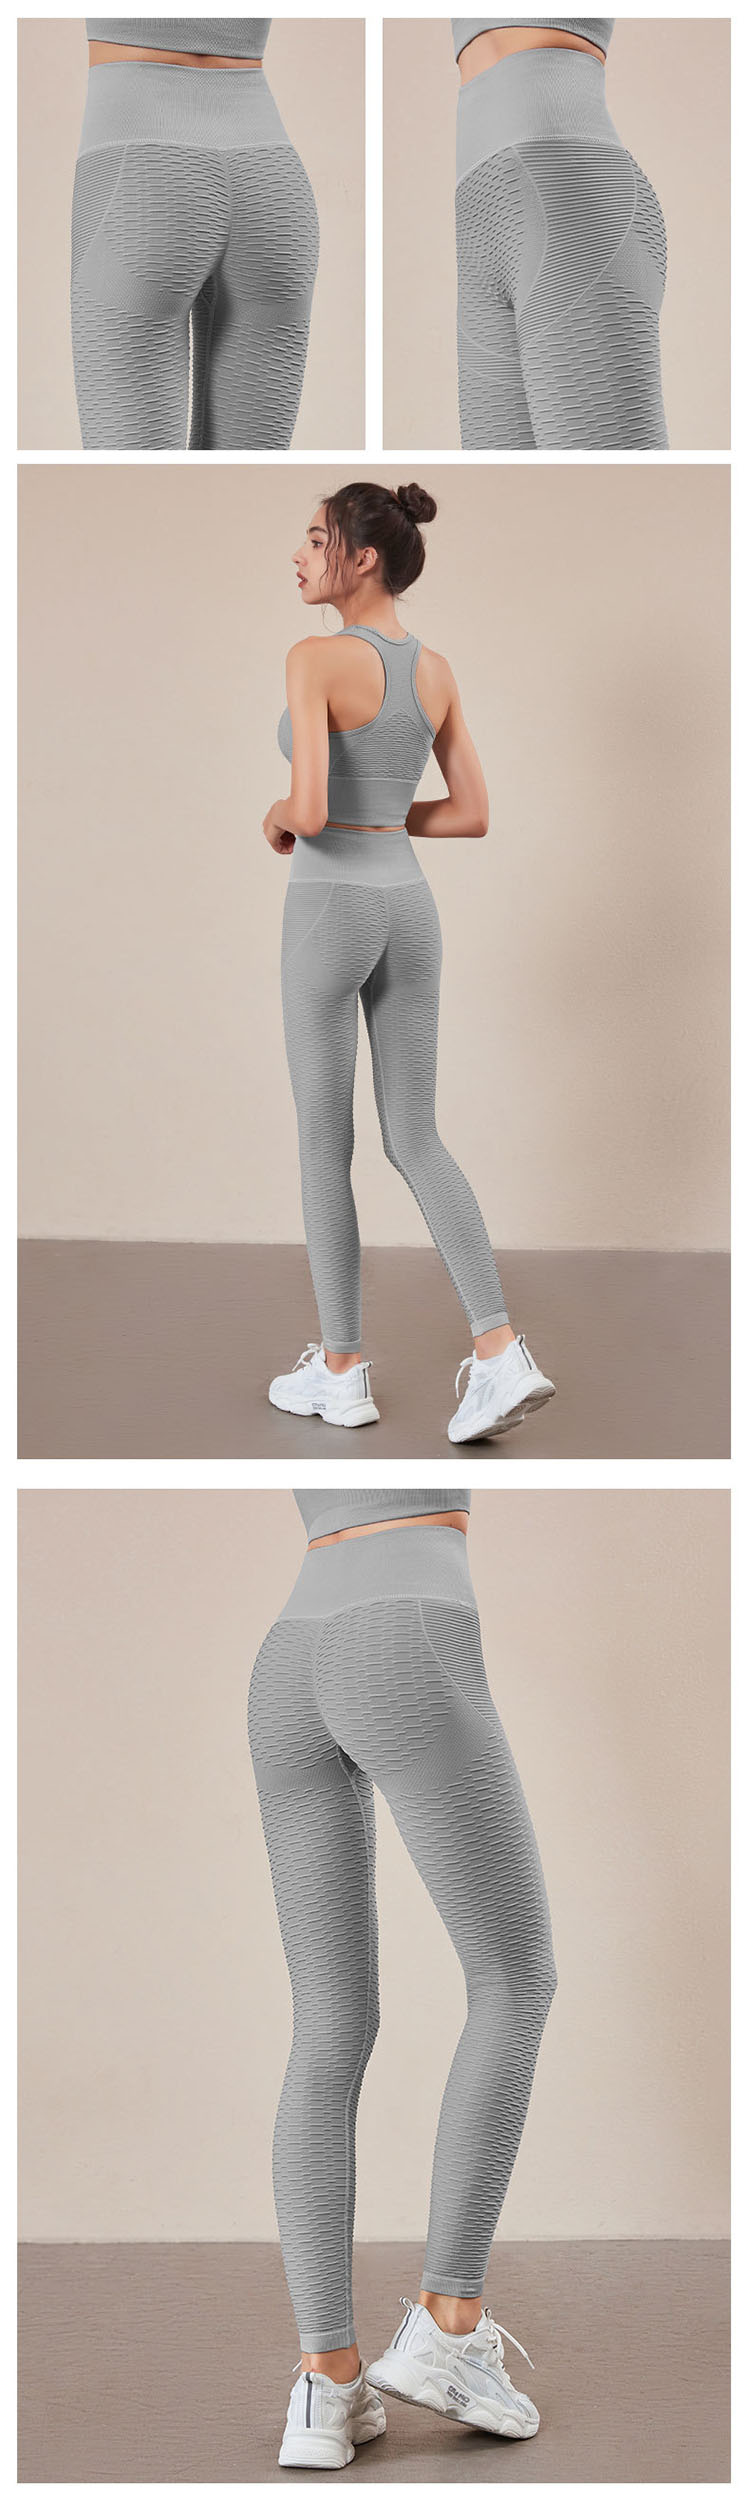 Create plump buttocks and lengthen waist-to-leg ratio.